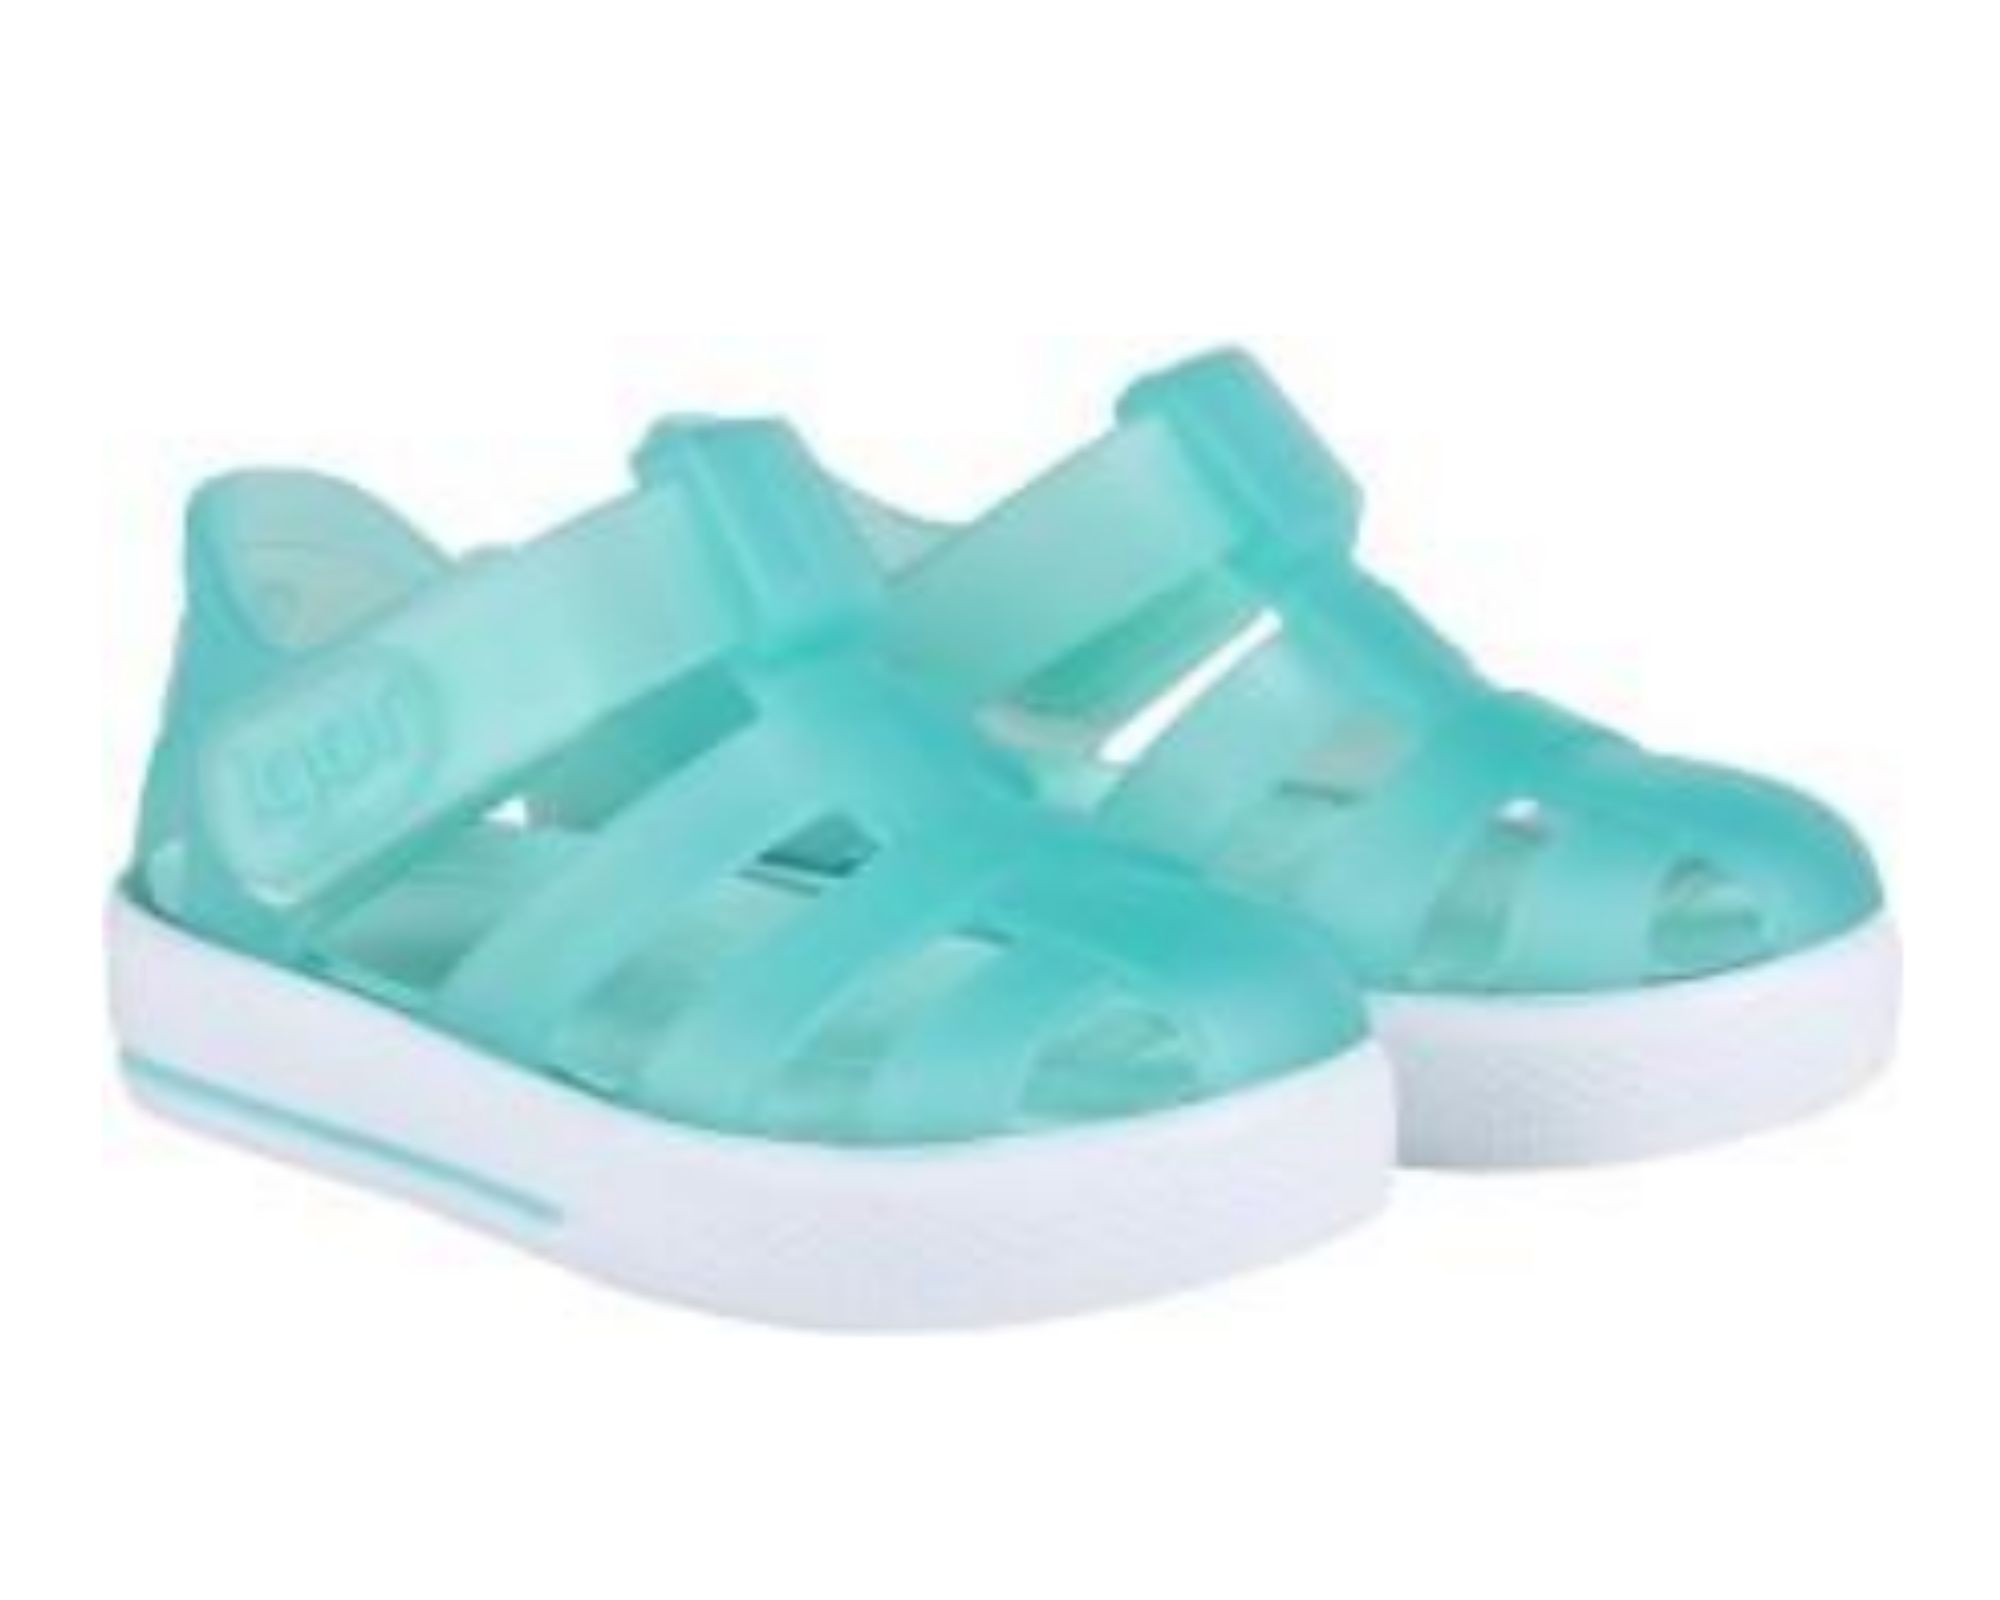 Igors Jelly Shoes Aqua